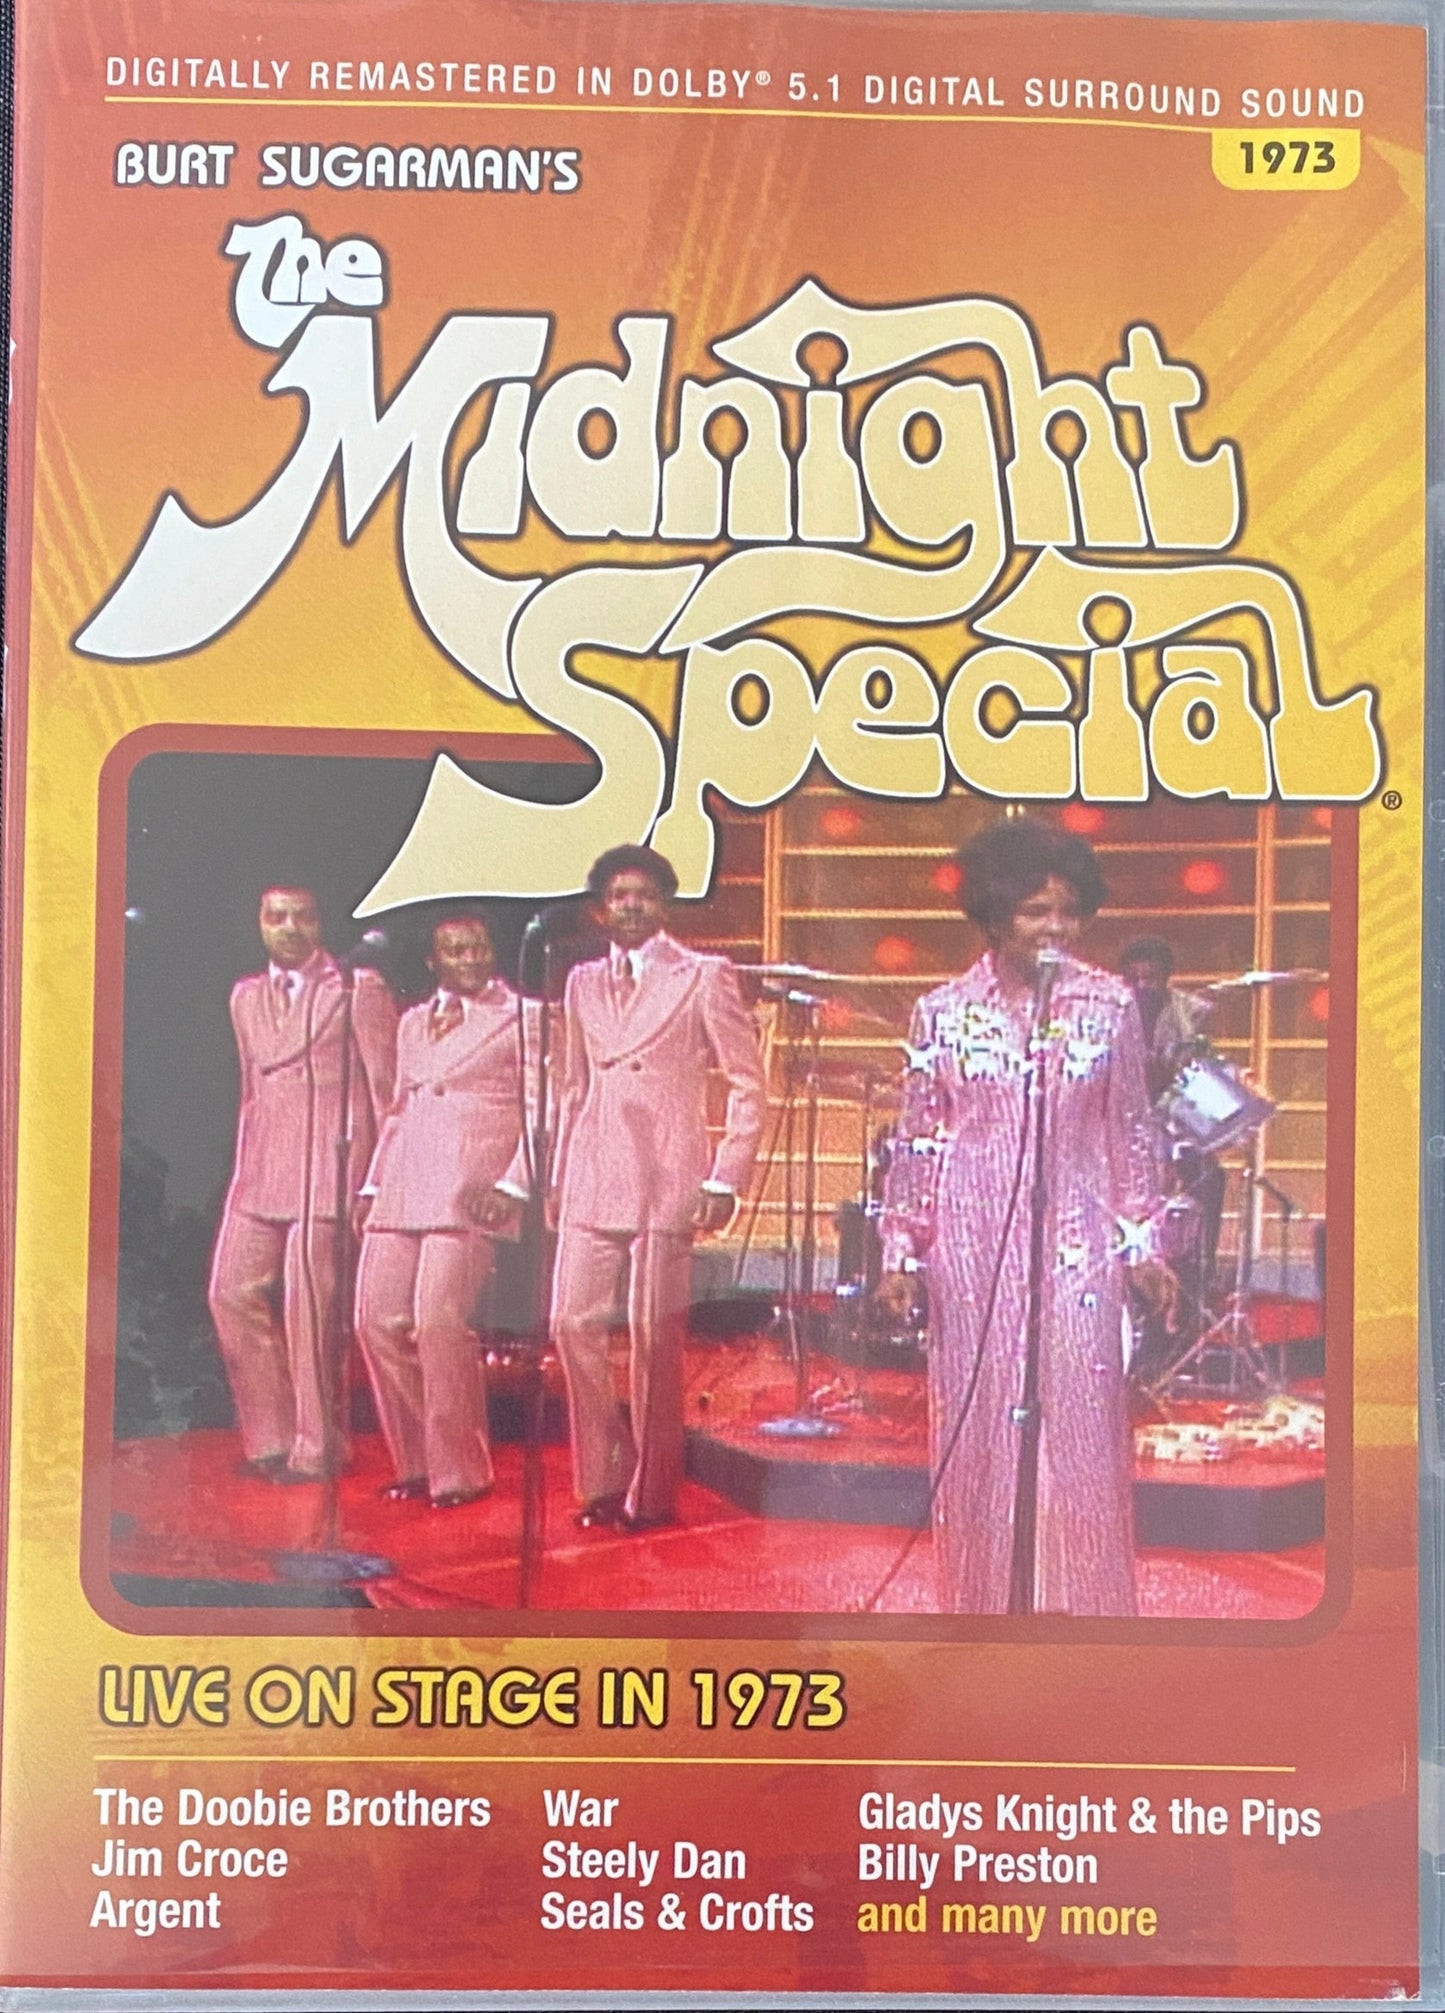 Burt Sugarman's The Midnight Special Live - 1973